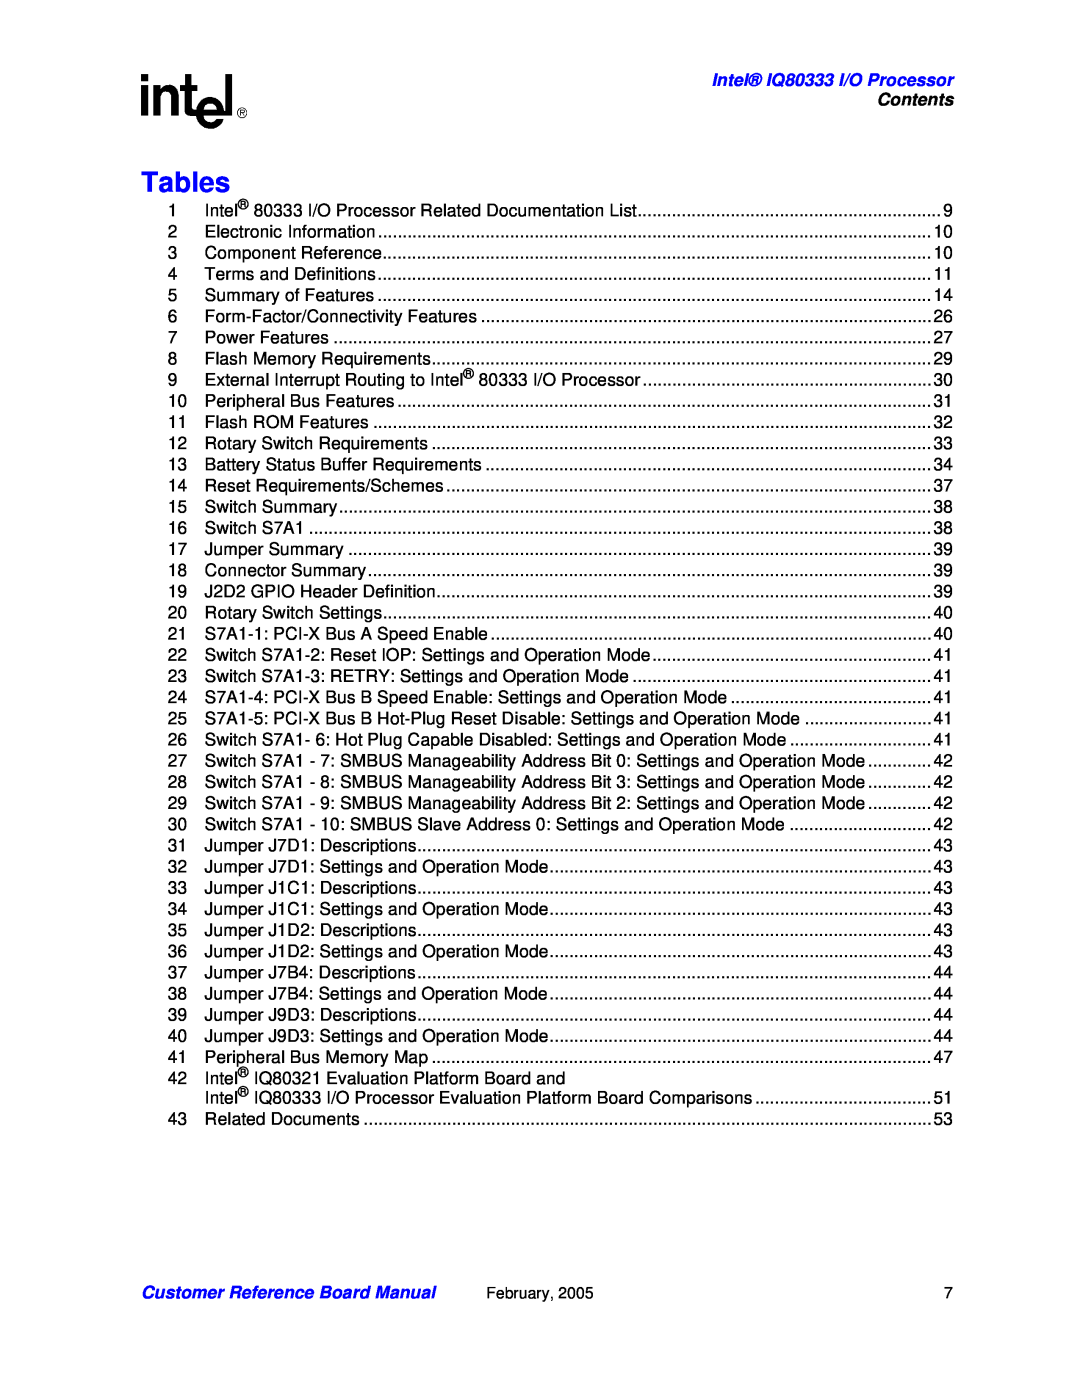 Intel manual Tables, Intel IQ80333 I/O Processor, Contents, Customer Reference Board Manual 